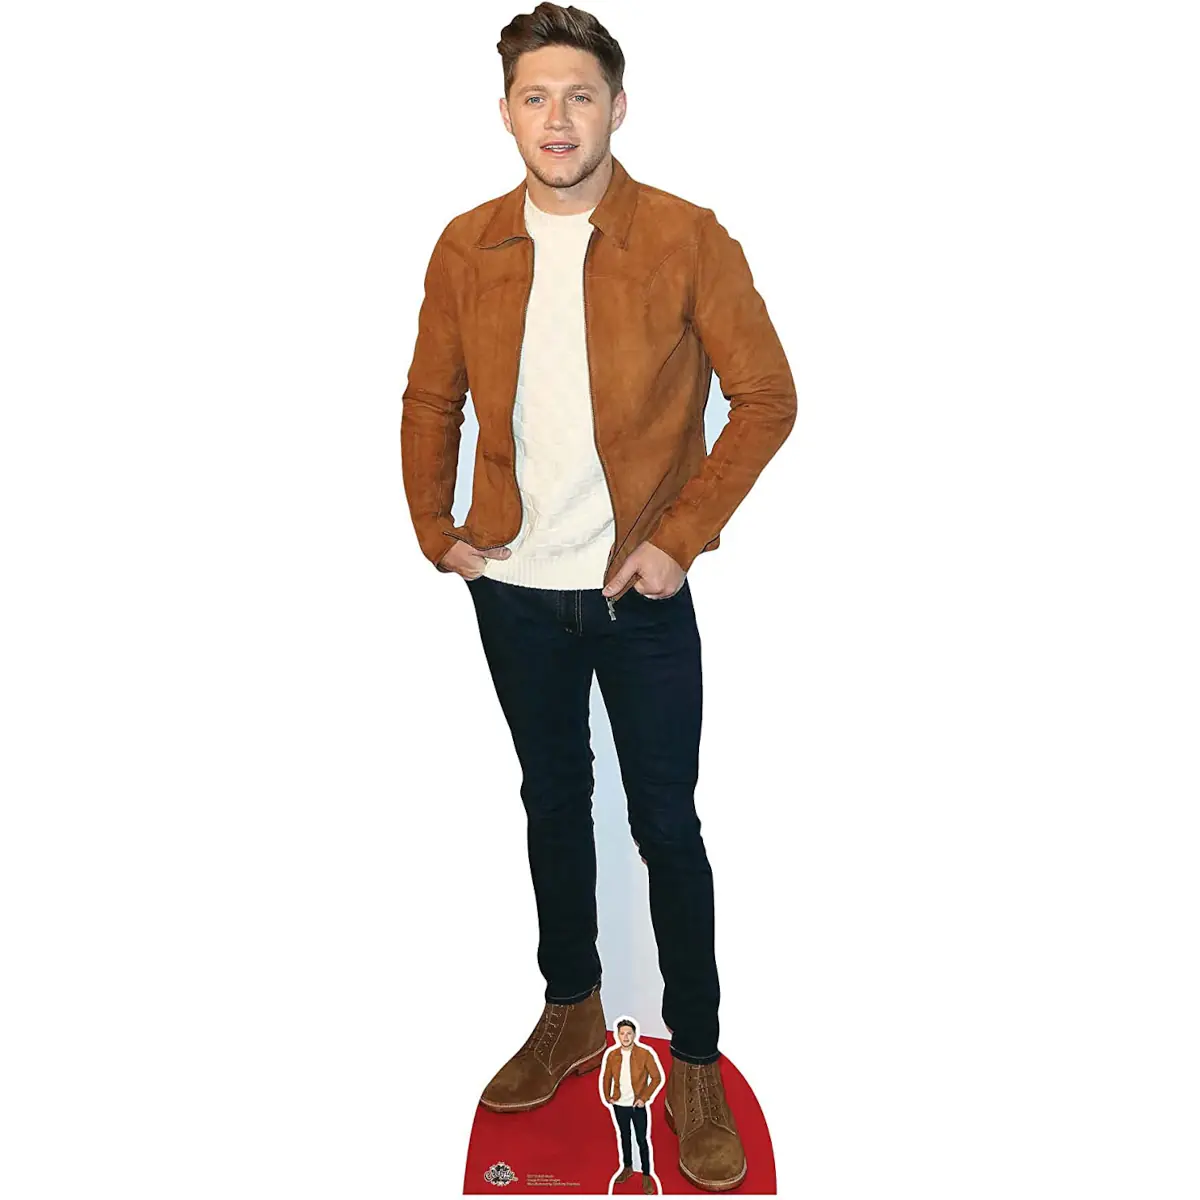 CS718 Niall Horan Suede Jacket Irish Singer Lifesize Mini Cardboard Cutout Standee